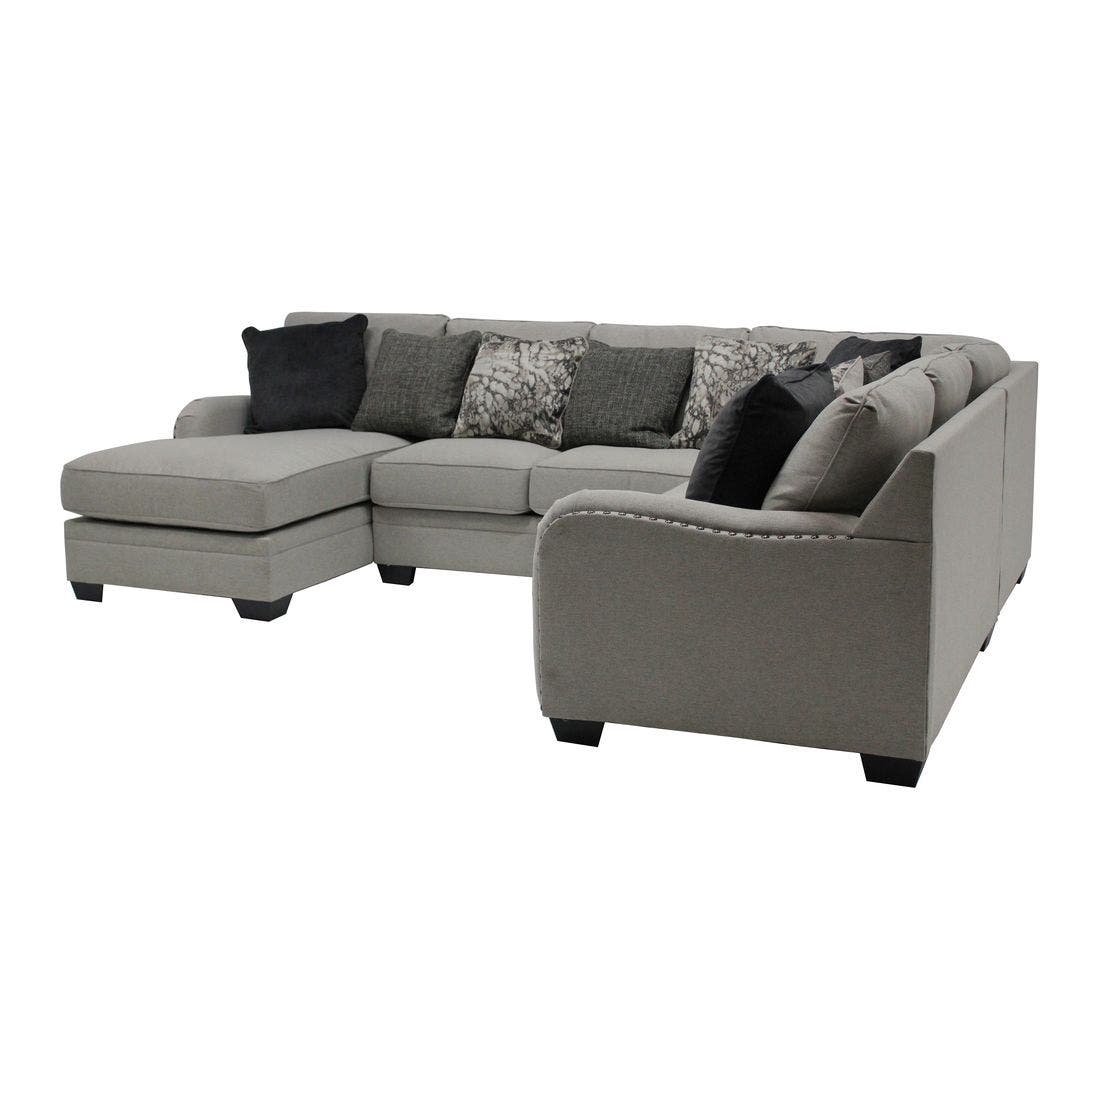 19170003-anzero-furniture-sofa-recliner-corner-sofas-01